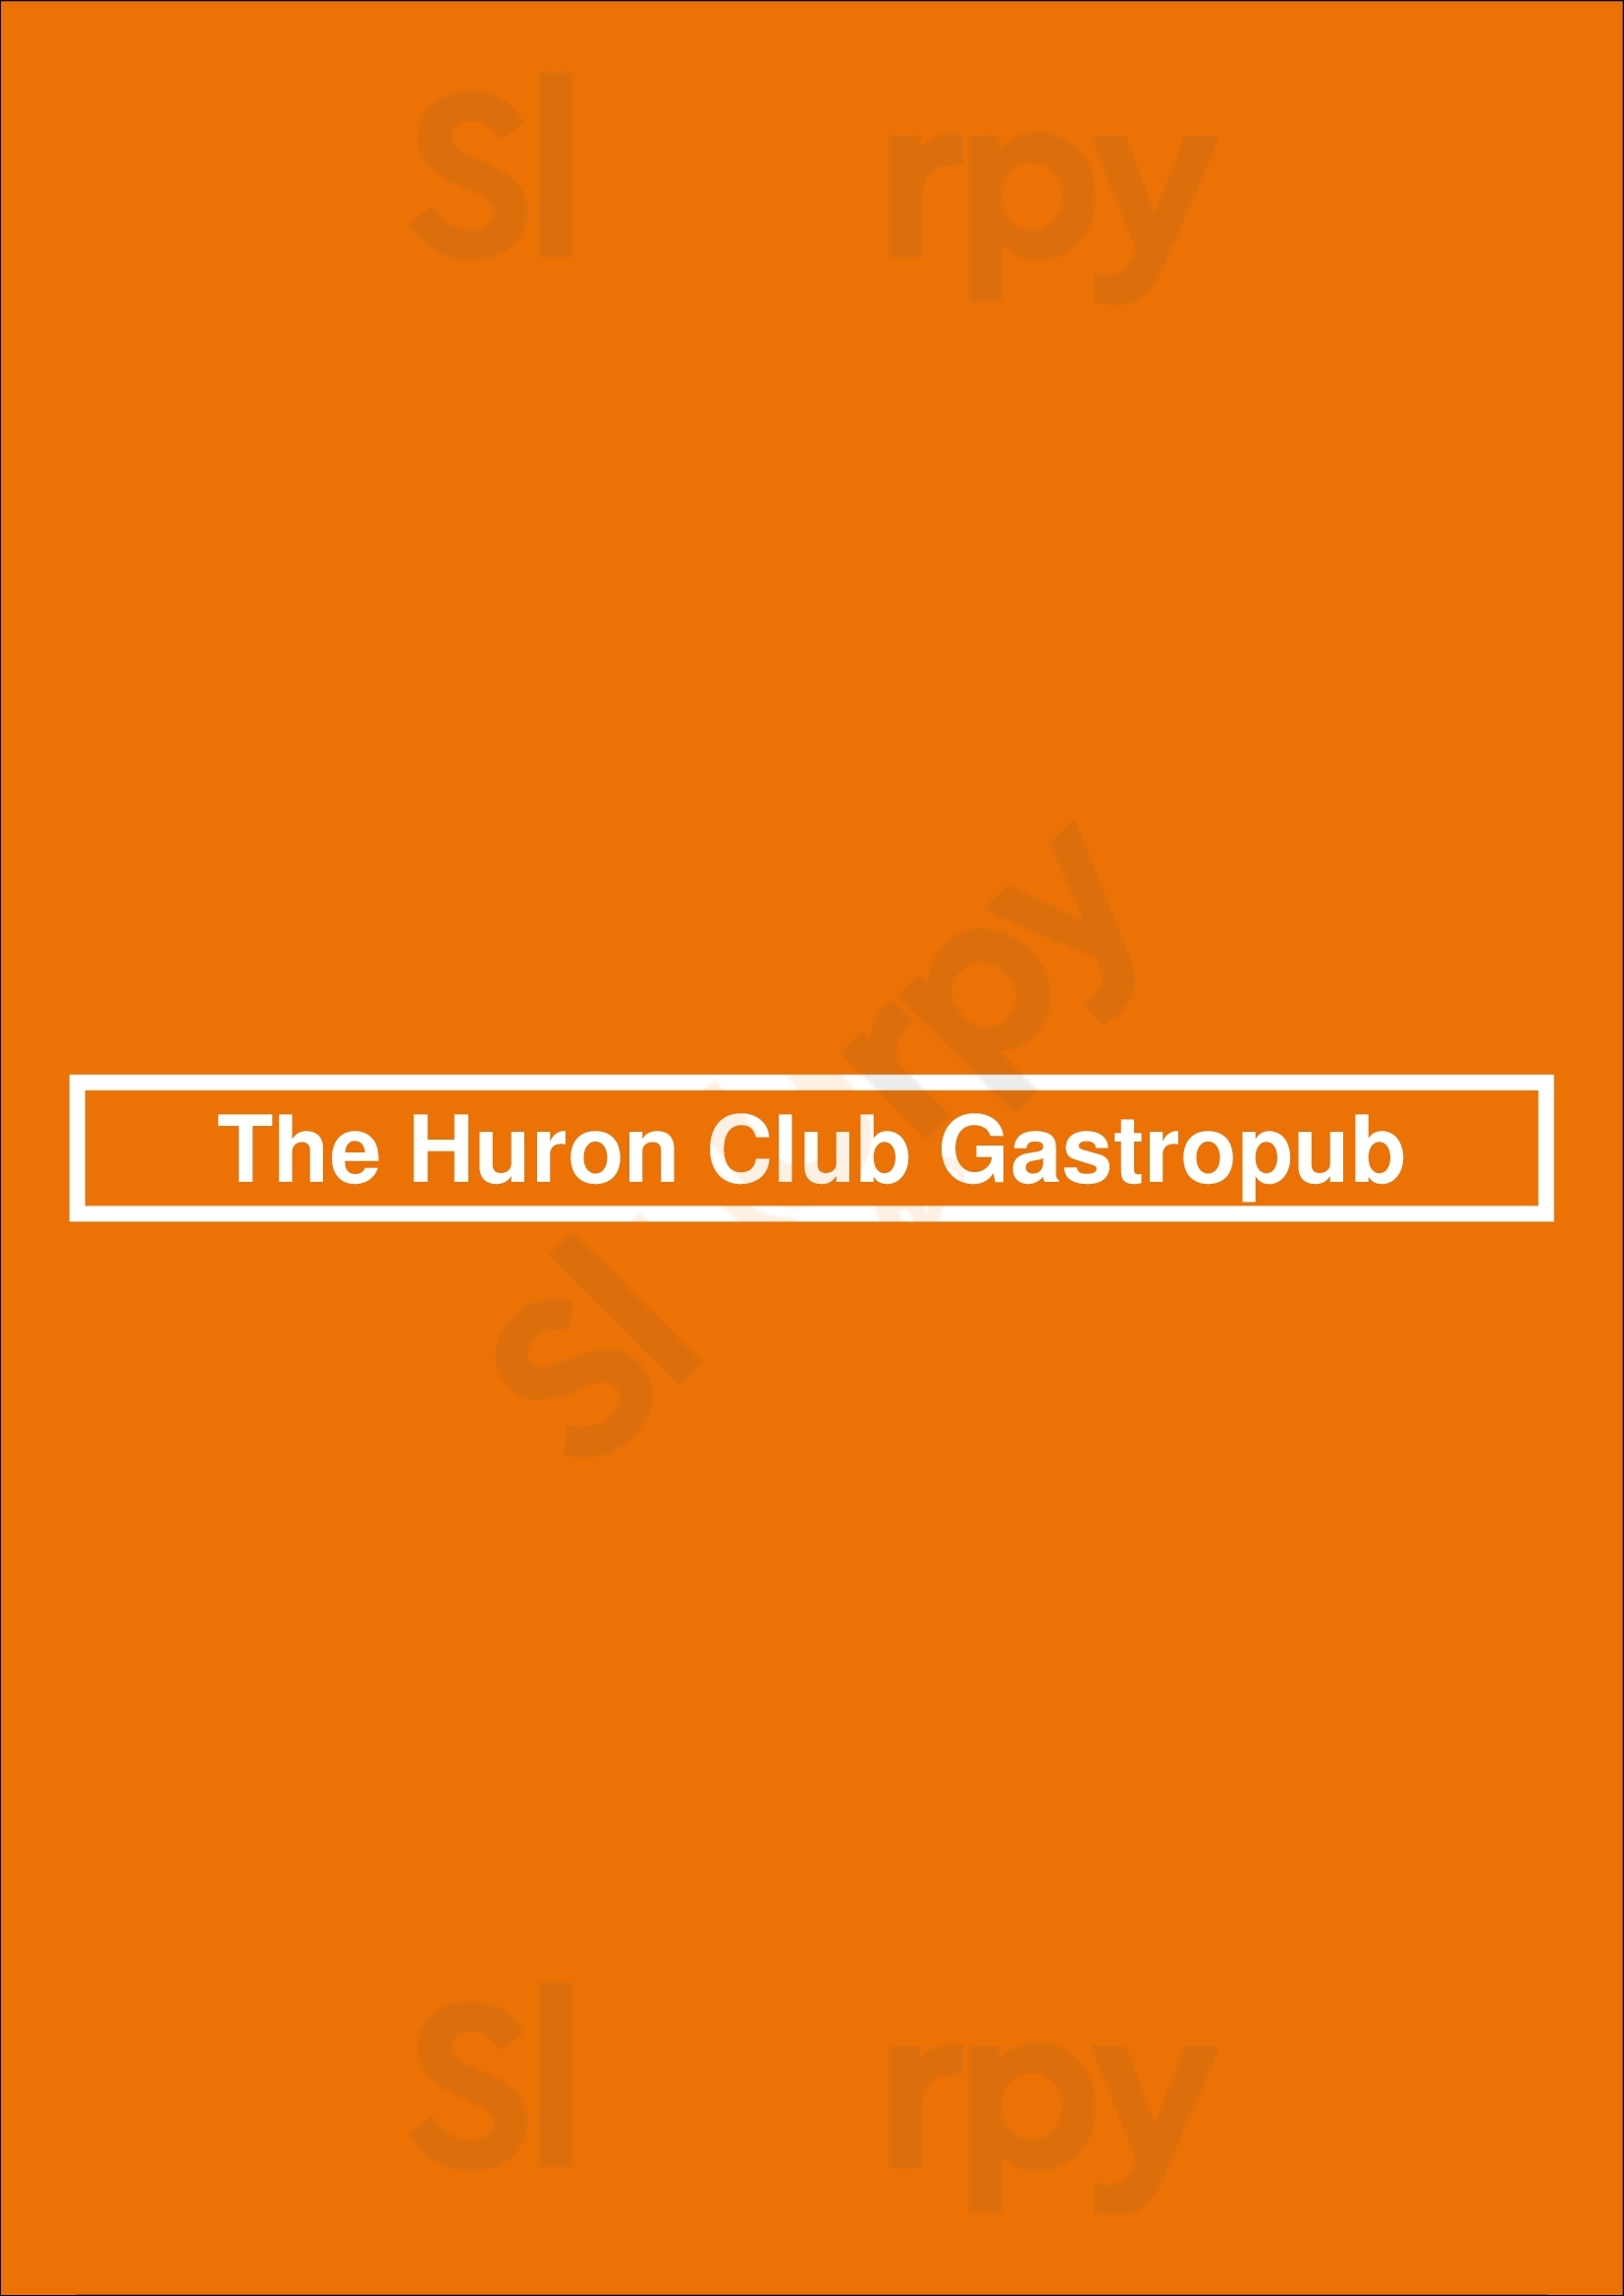 The Huron Club Gastropub Collingwood Menu - 1